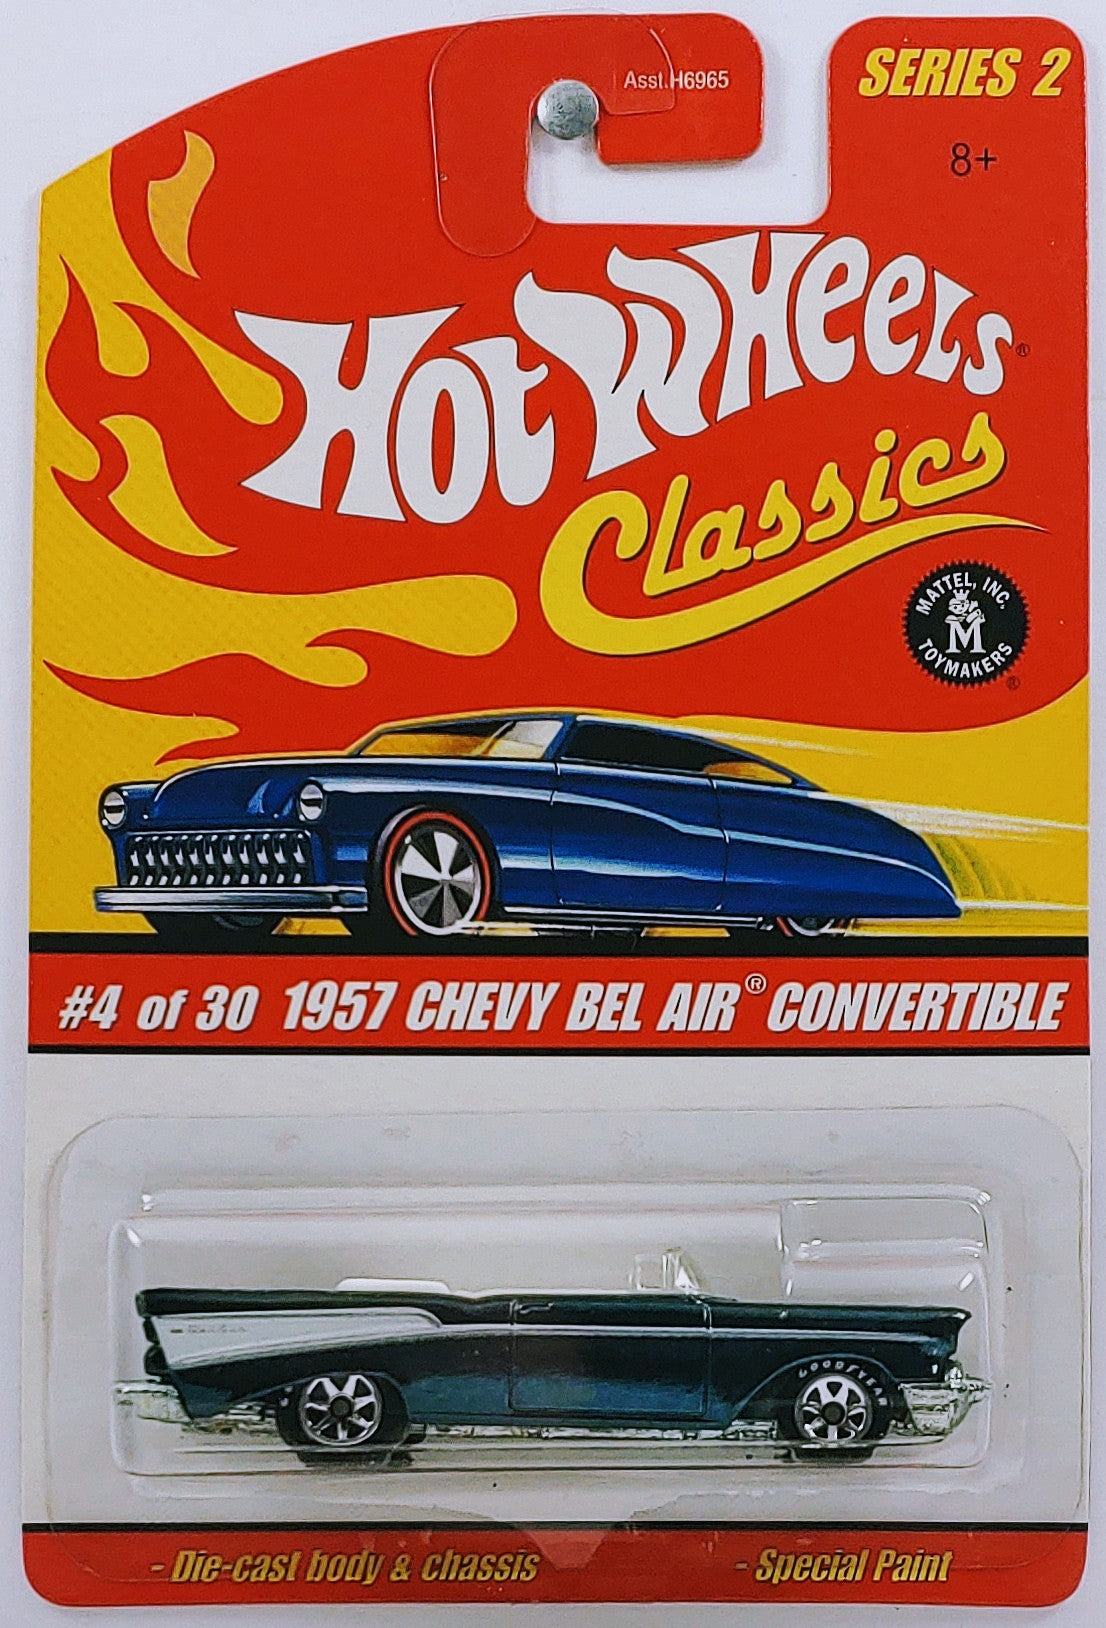 Hot Wheels 2006 - Classics Series 2 # 04/30 - 1957 Chevy Bel Air Convertible - Spectraflame Black - 7 Spokes with Goodyear Tires - Metal/Metal - HWC Rewards Exclusive